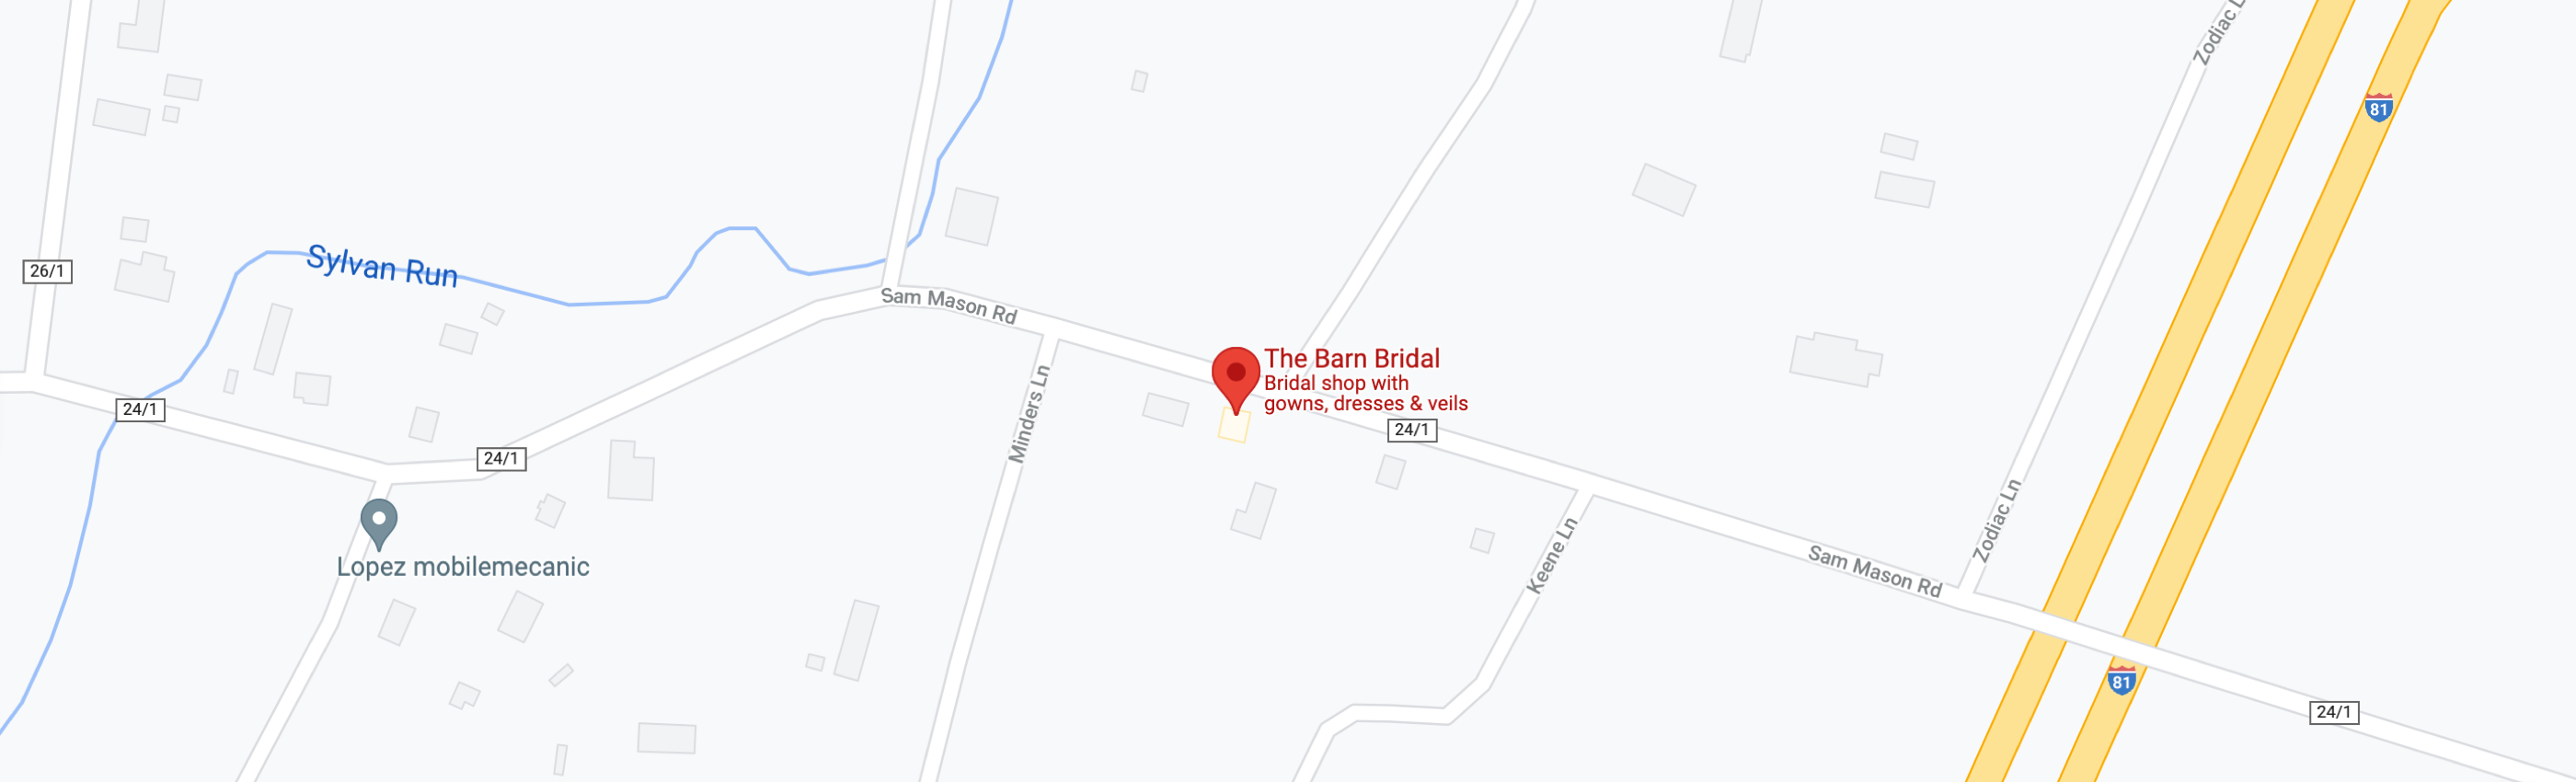 The Barn Bridal location